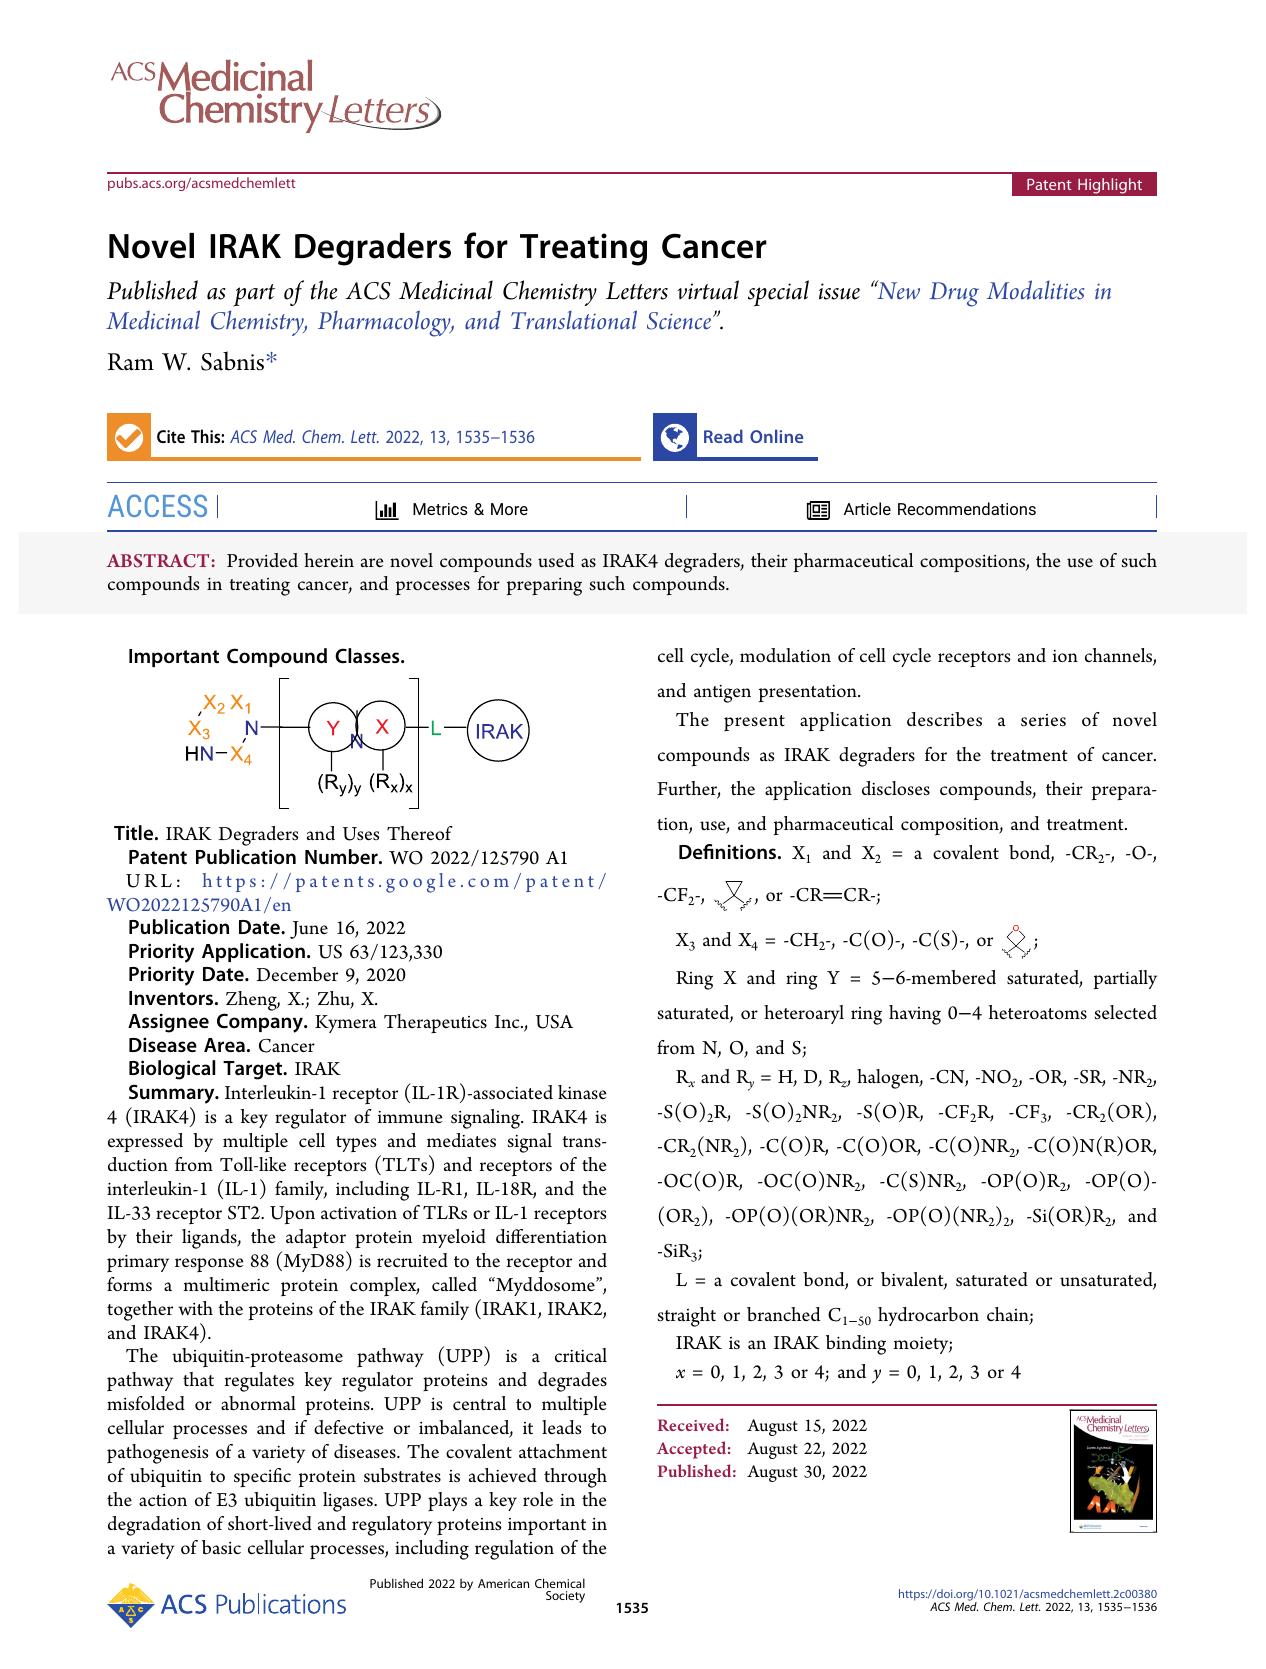 Novel IRAK Degraders for Treating Cancer by Ram W. Sabnis